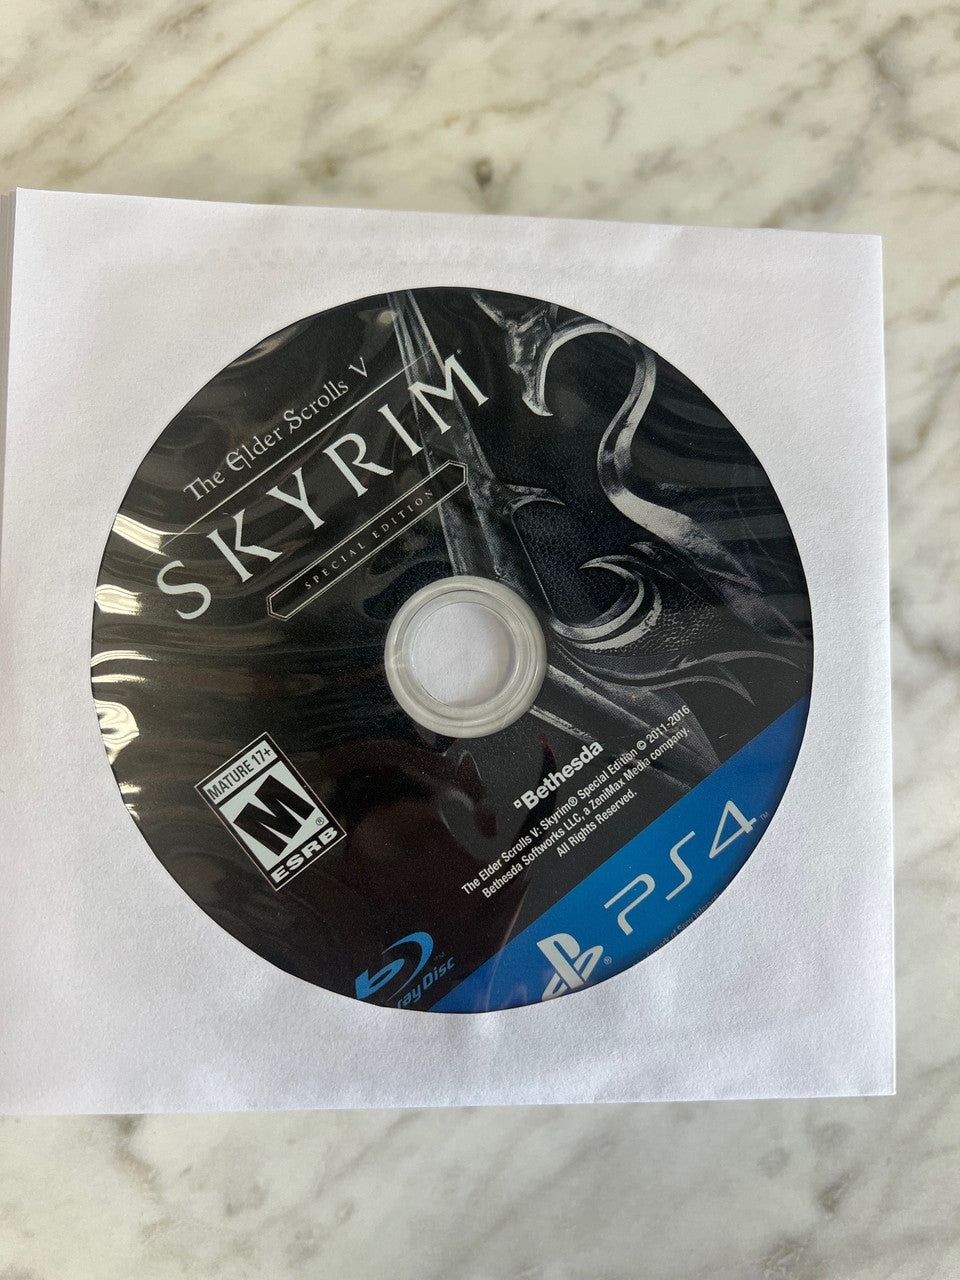 Elder Scrolls V Skyrim Special Edition PS4 Playstation4 loose disc only